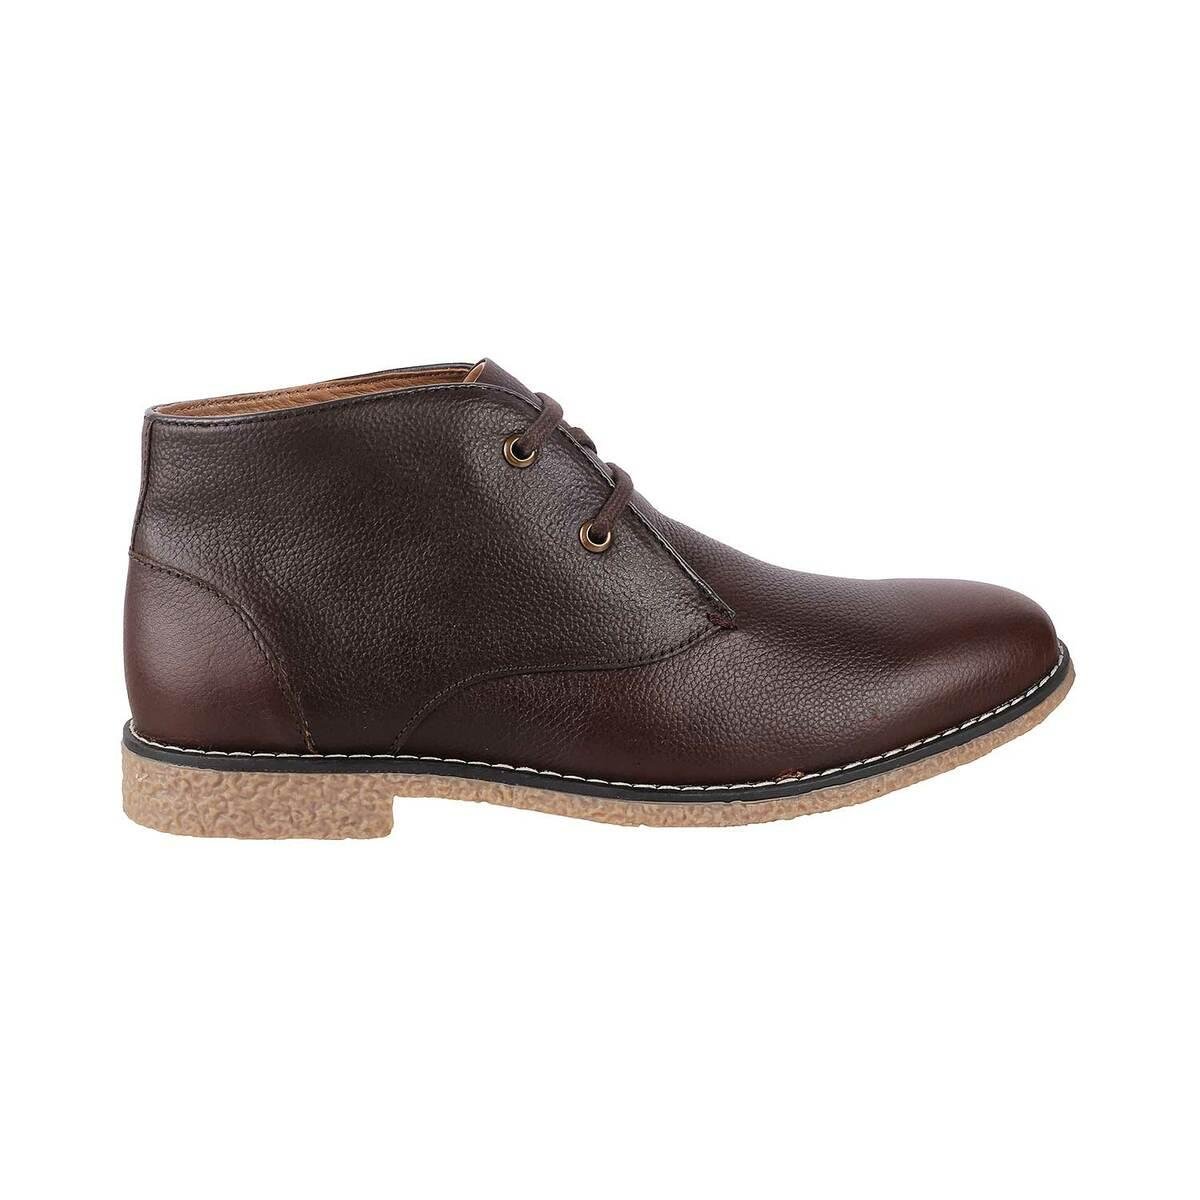 Buy Men Brown Casual Boots Online | SKU: 71-9988-12-40-Metro Shoes